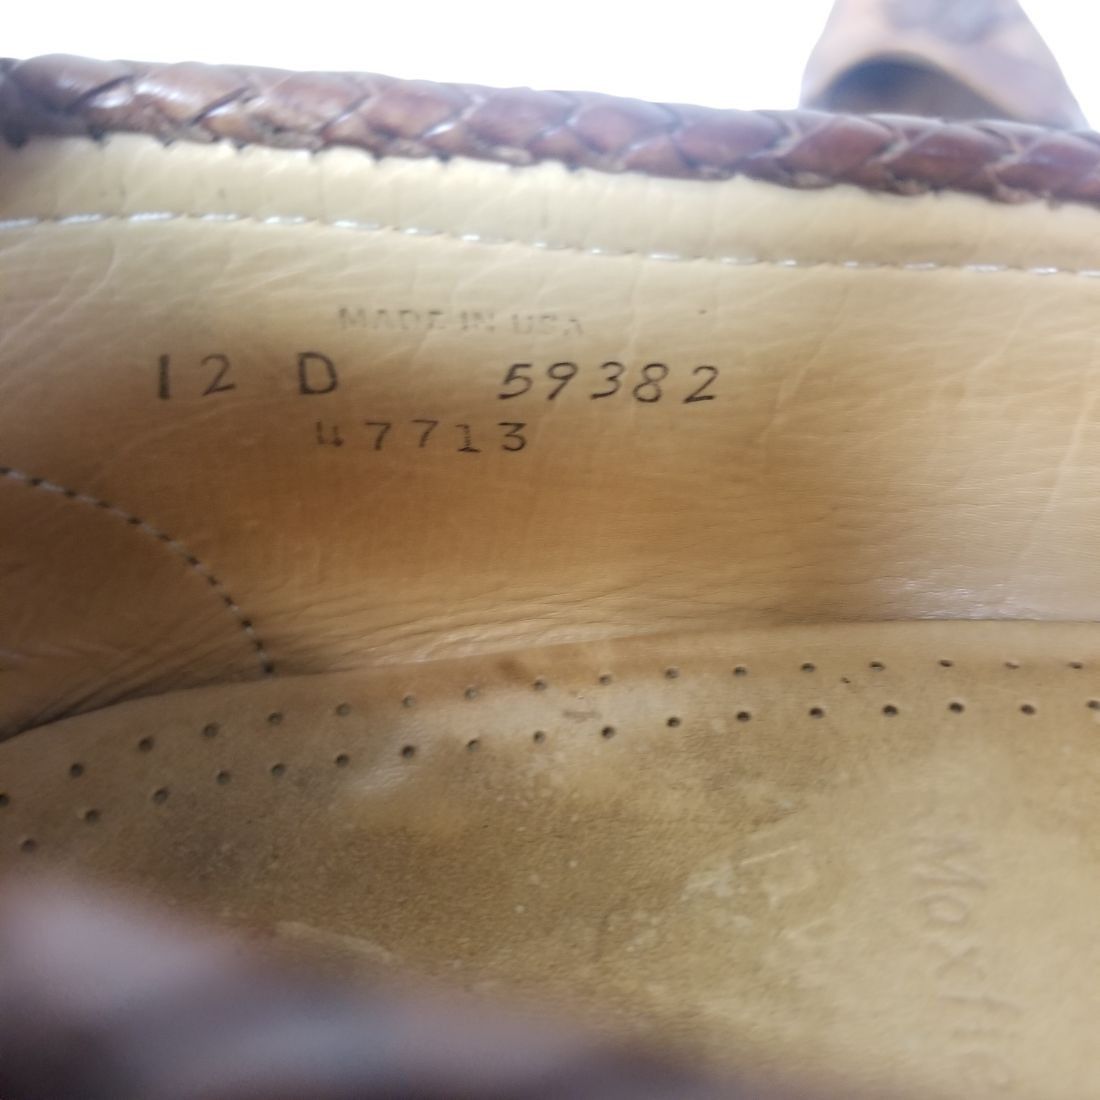 Allen Edmonds Allen Edmonds Leather Closed Toe Slip On Maxfield Loafers Size US 12 / EU 45 - 9 Thumbnail